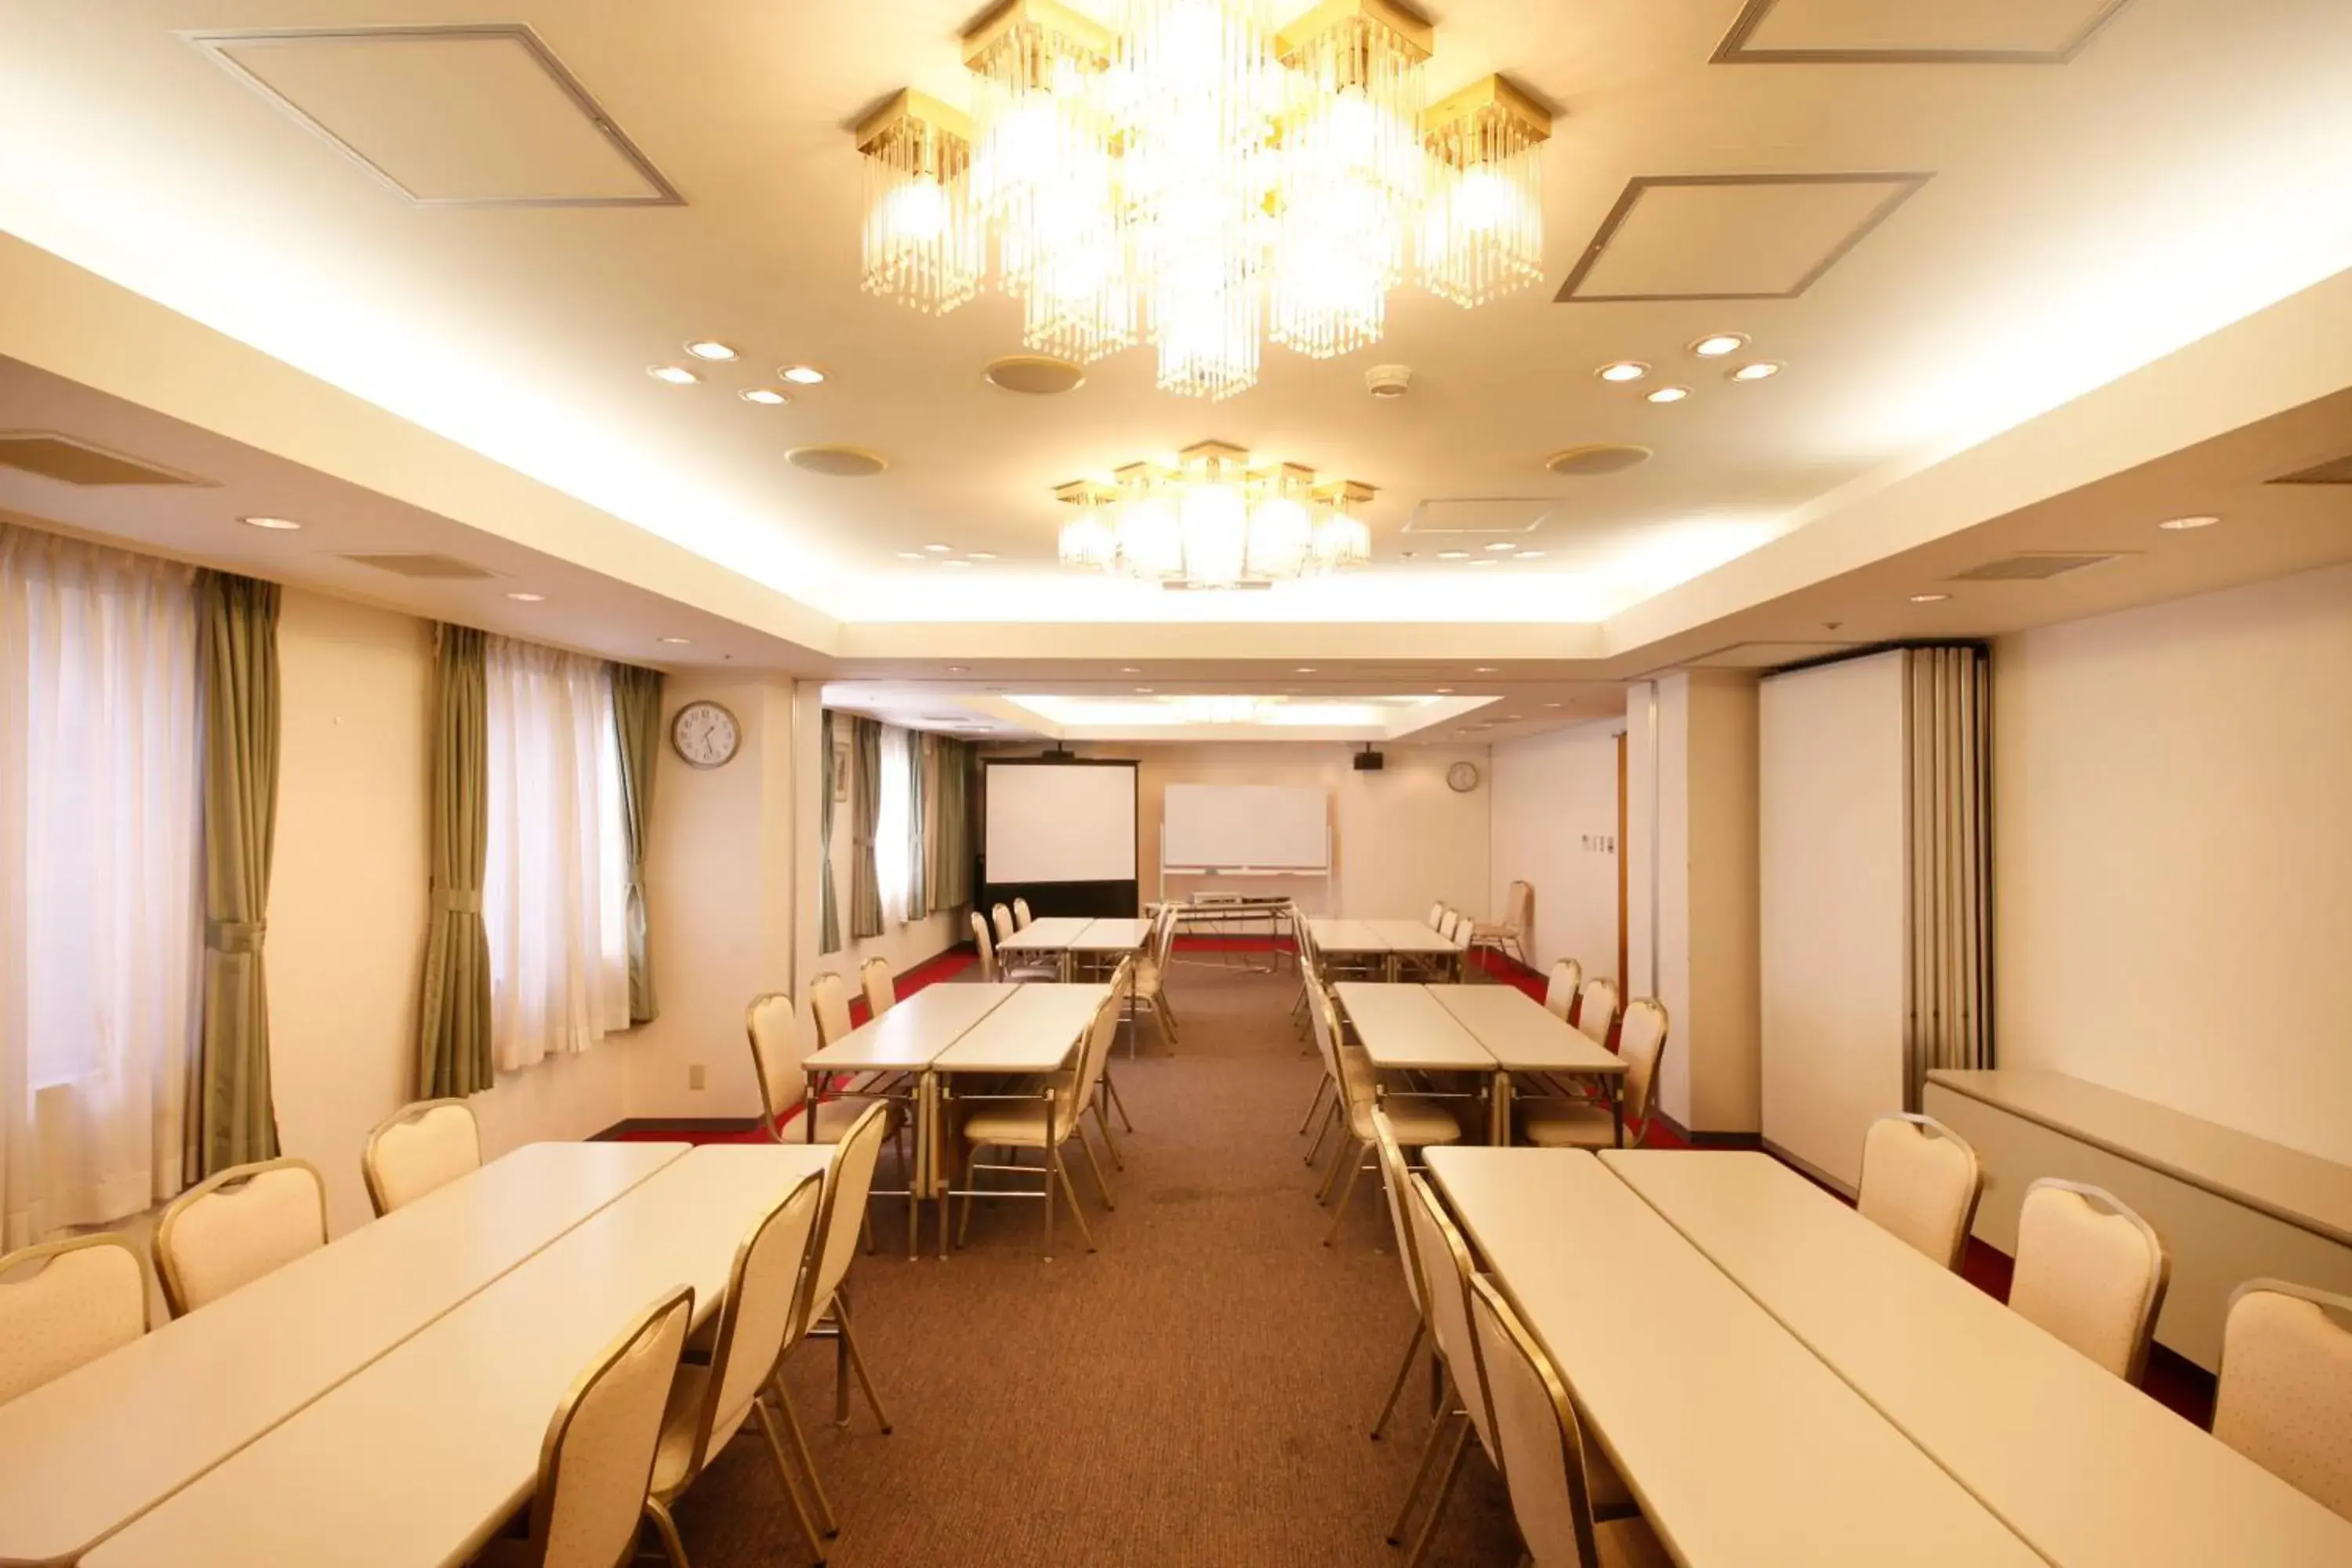 Area and facilities in Court Hotel Shin-Yokohama